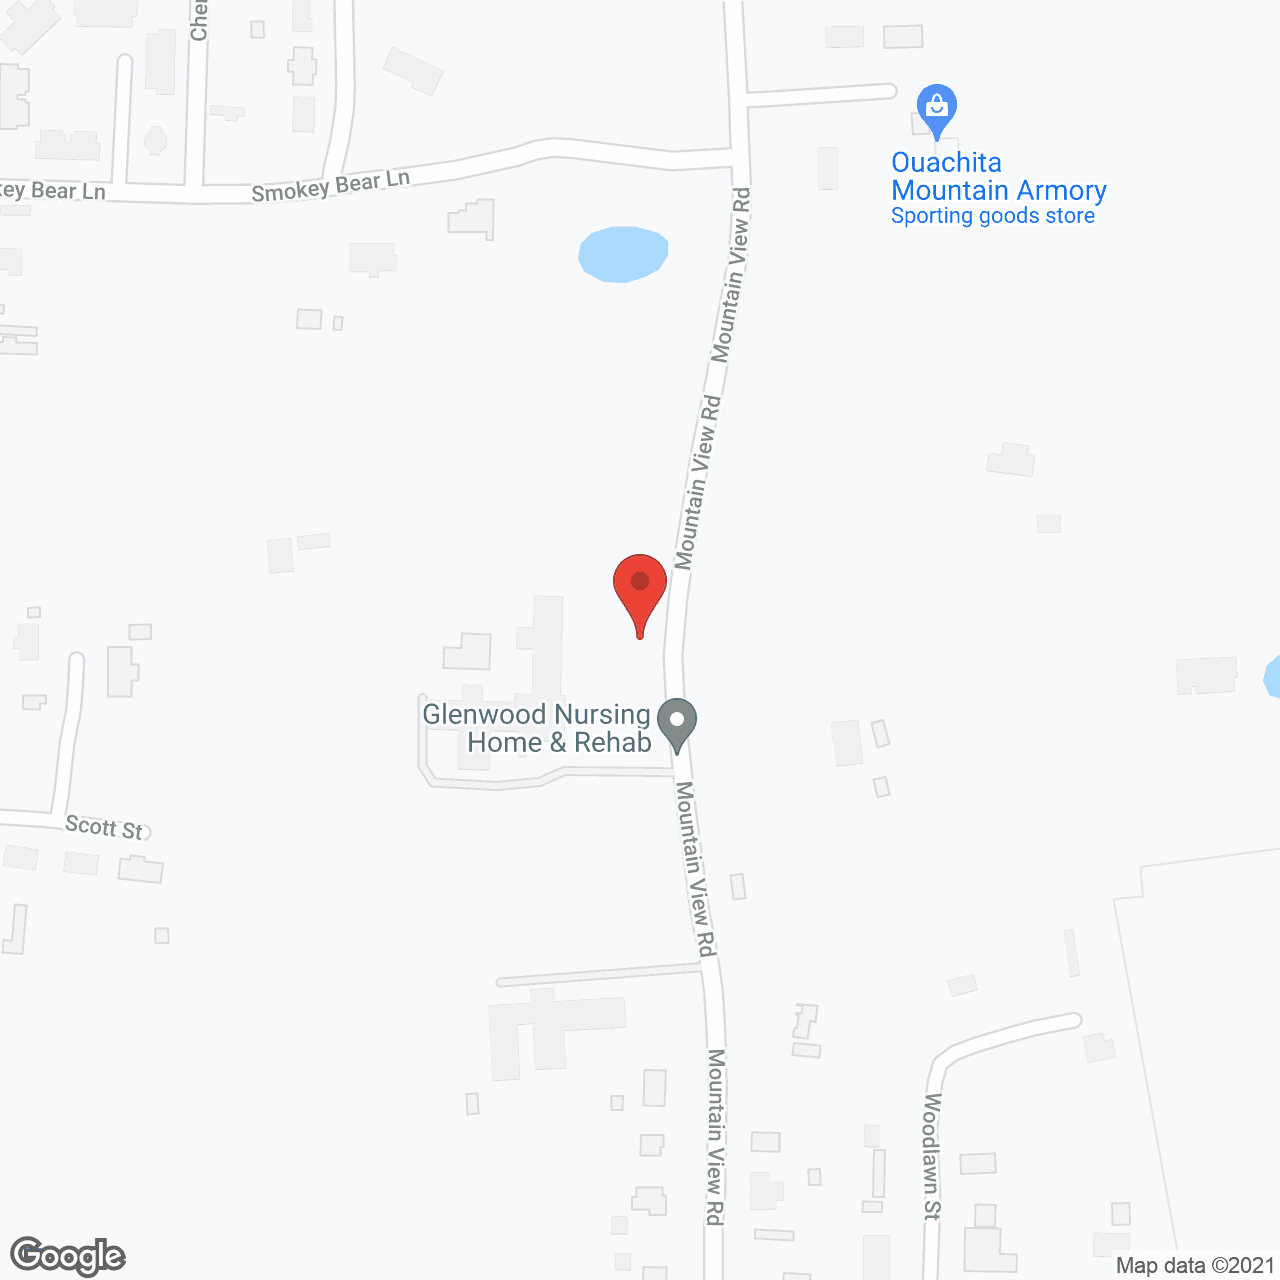 Glenwood Nursing Home in google map